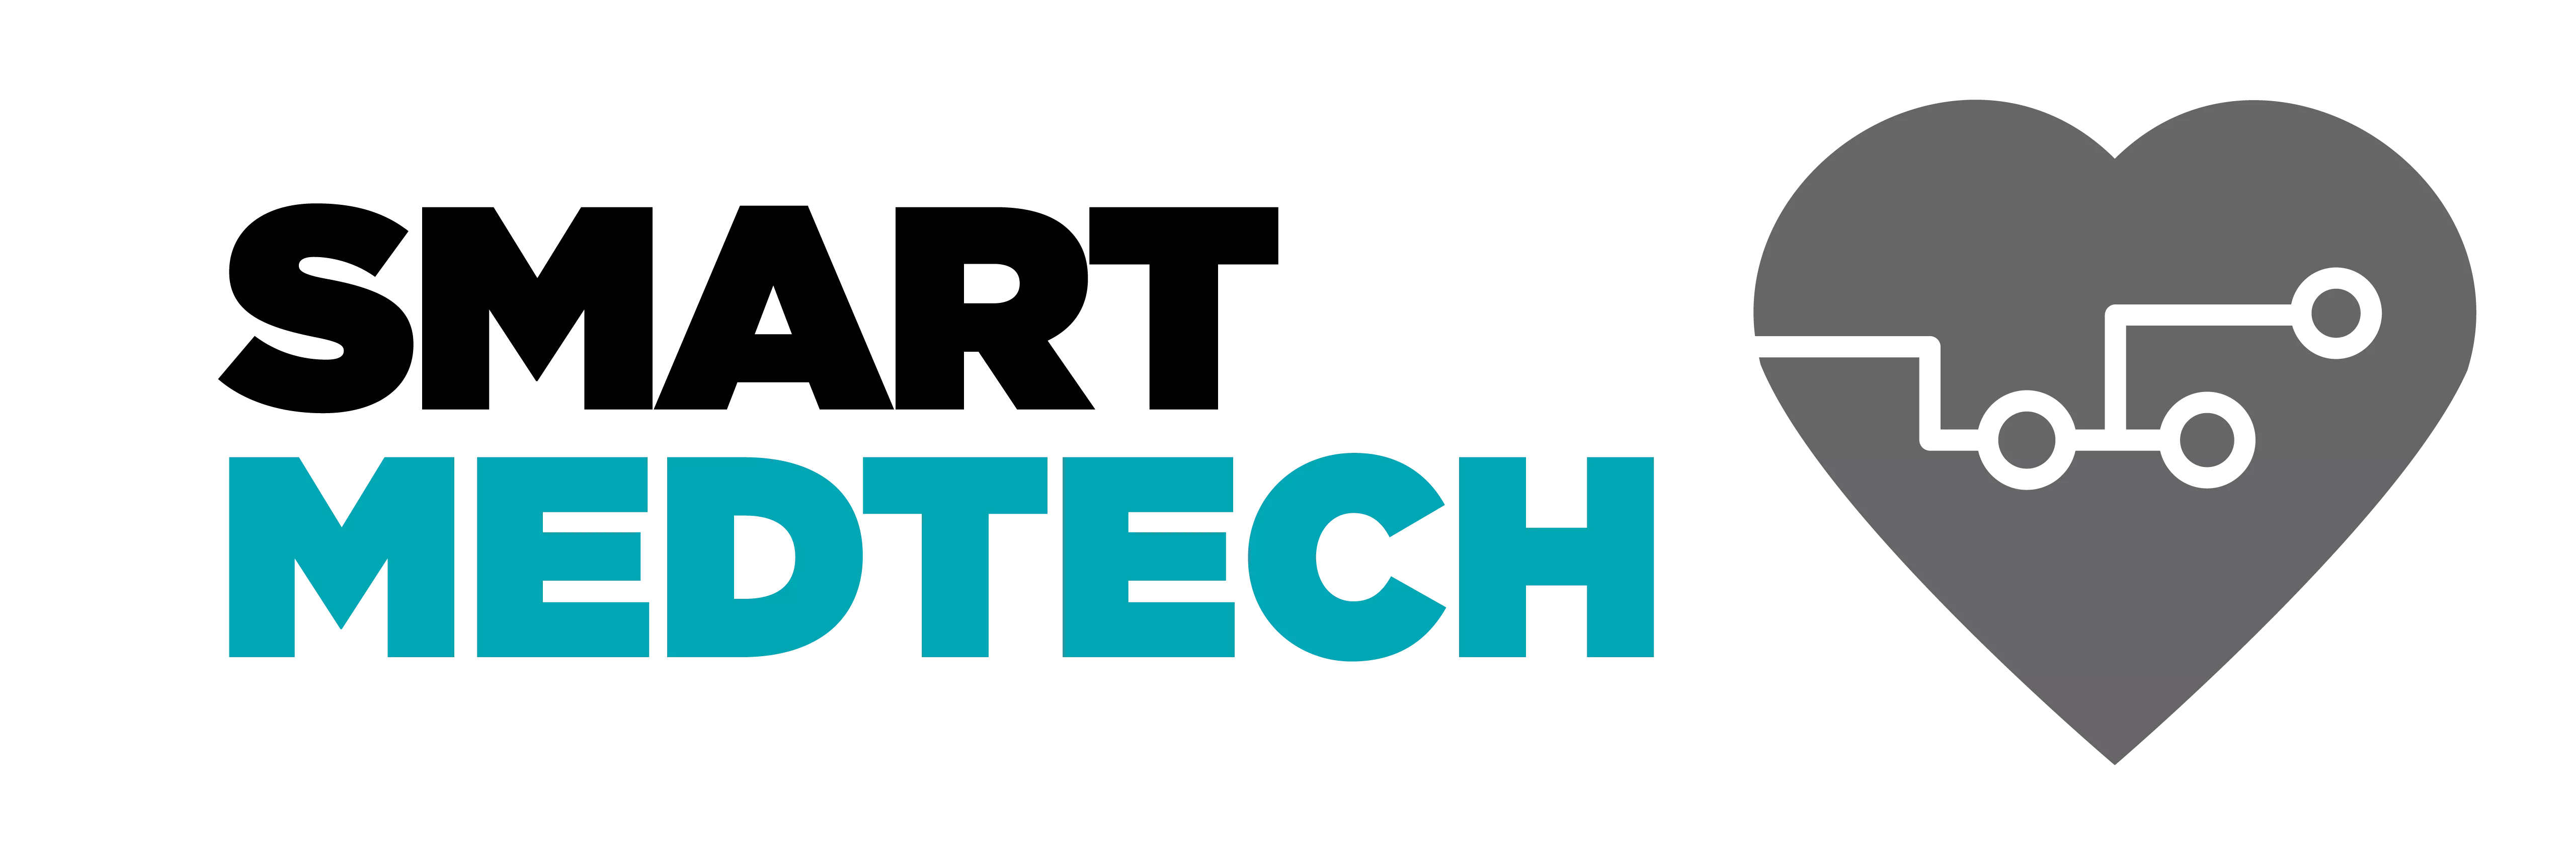 Smart MedTech logo